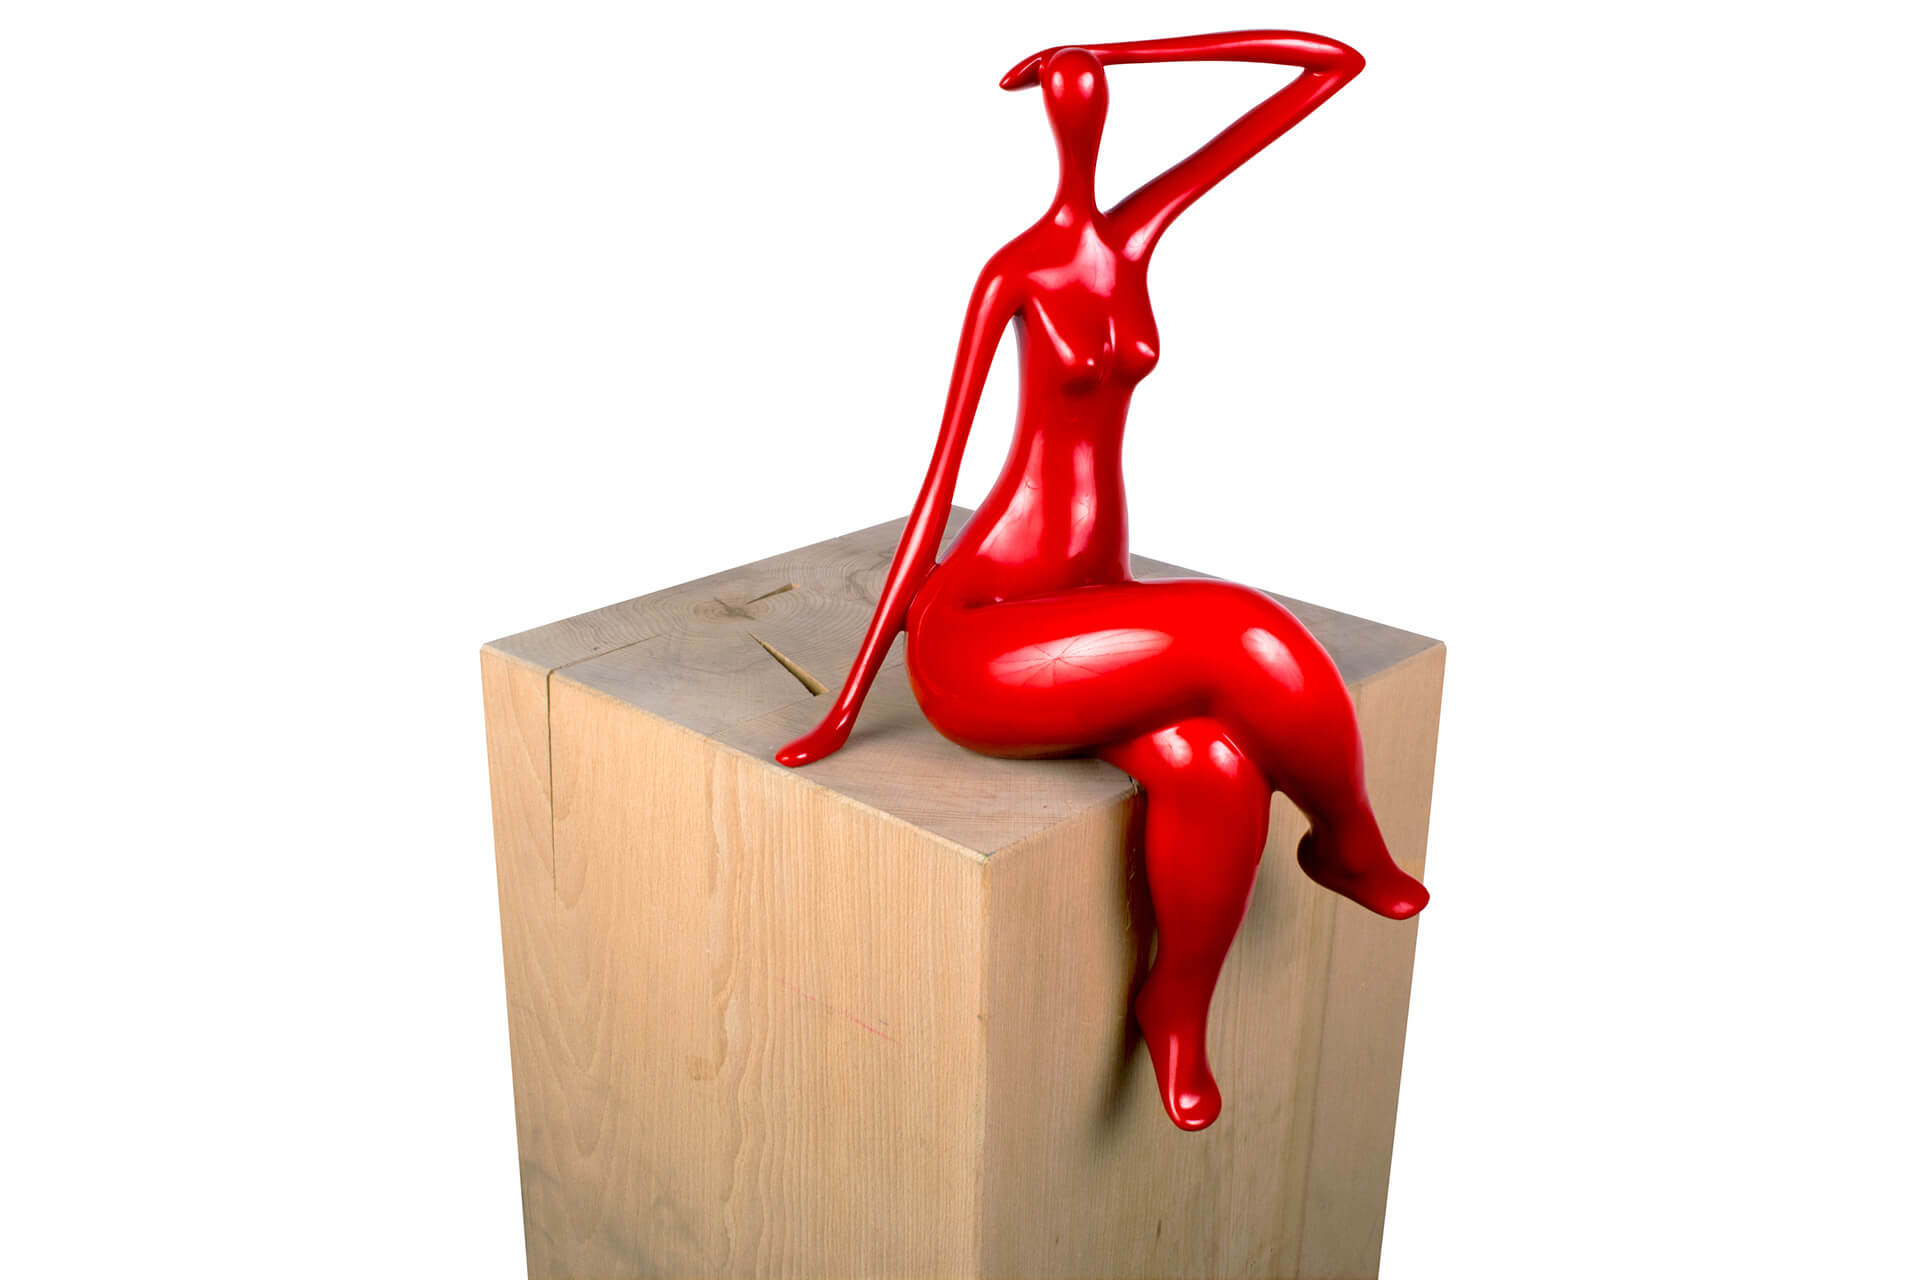 kl frau model akt erotik abstrakt modern skulptur plastik figur deko modern 03